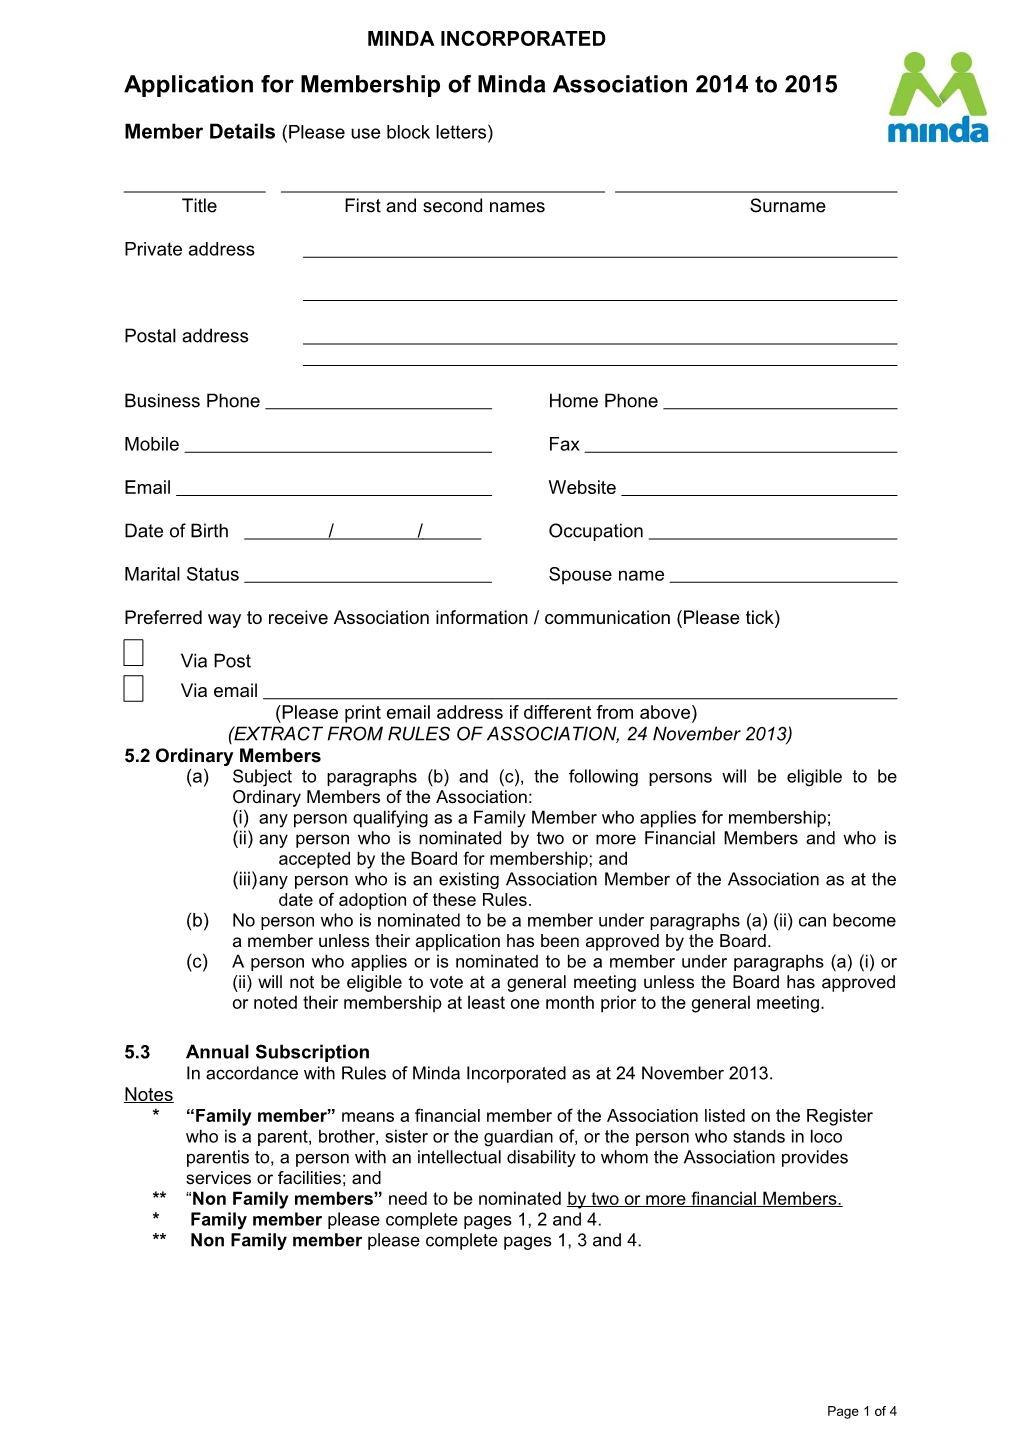 Application for Membership of Minda Association 2014 to 2015